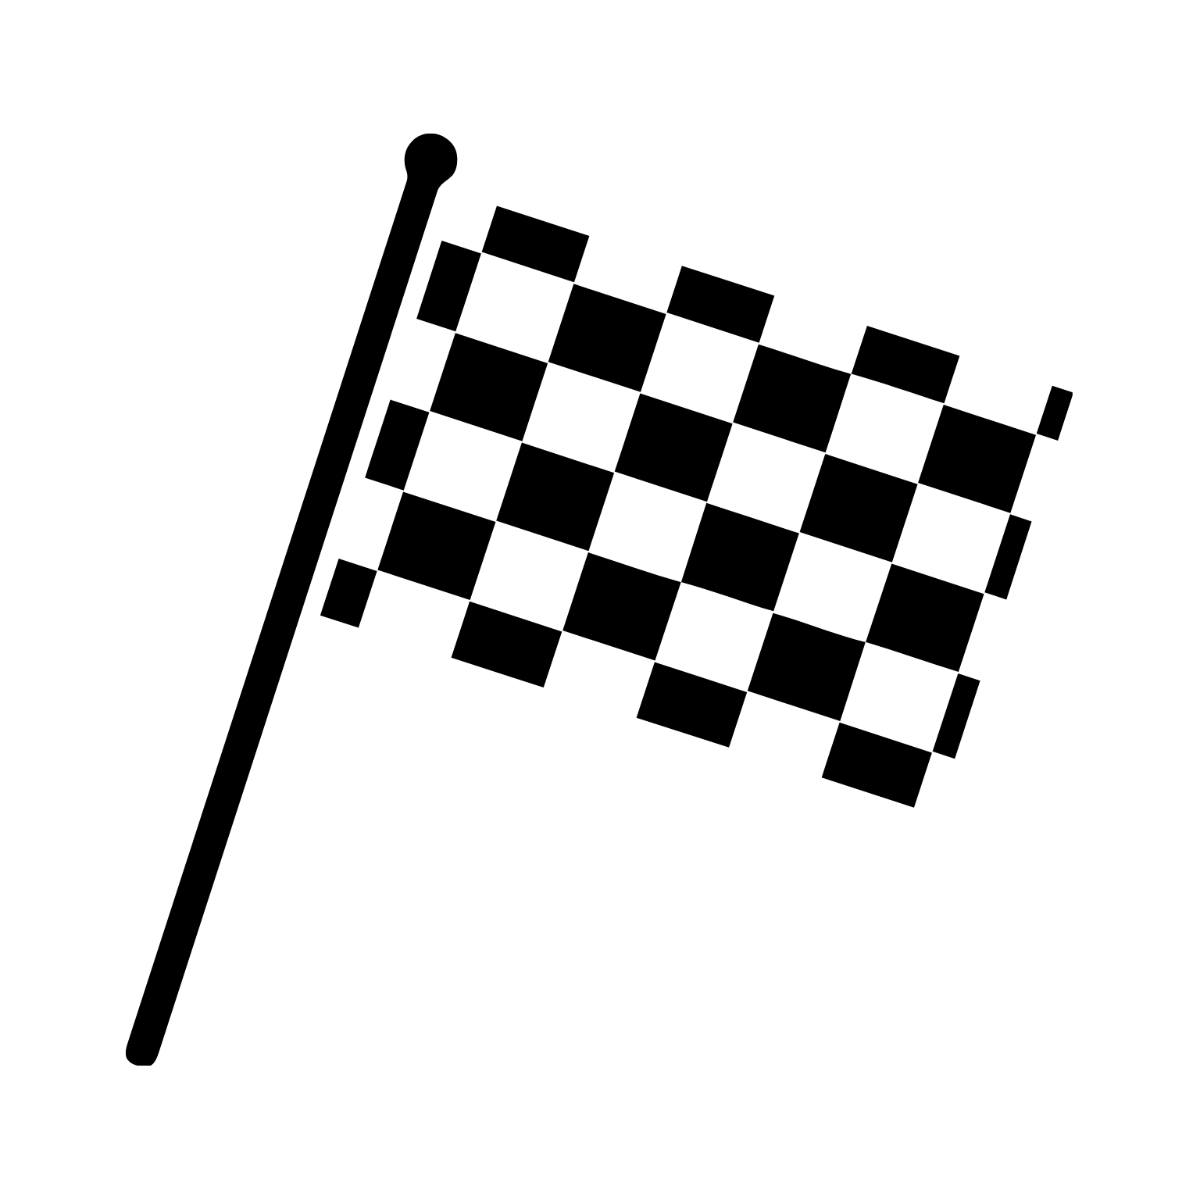 Finish Racing Flag clipart